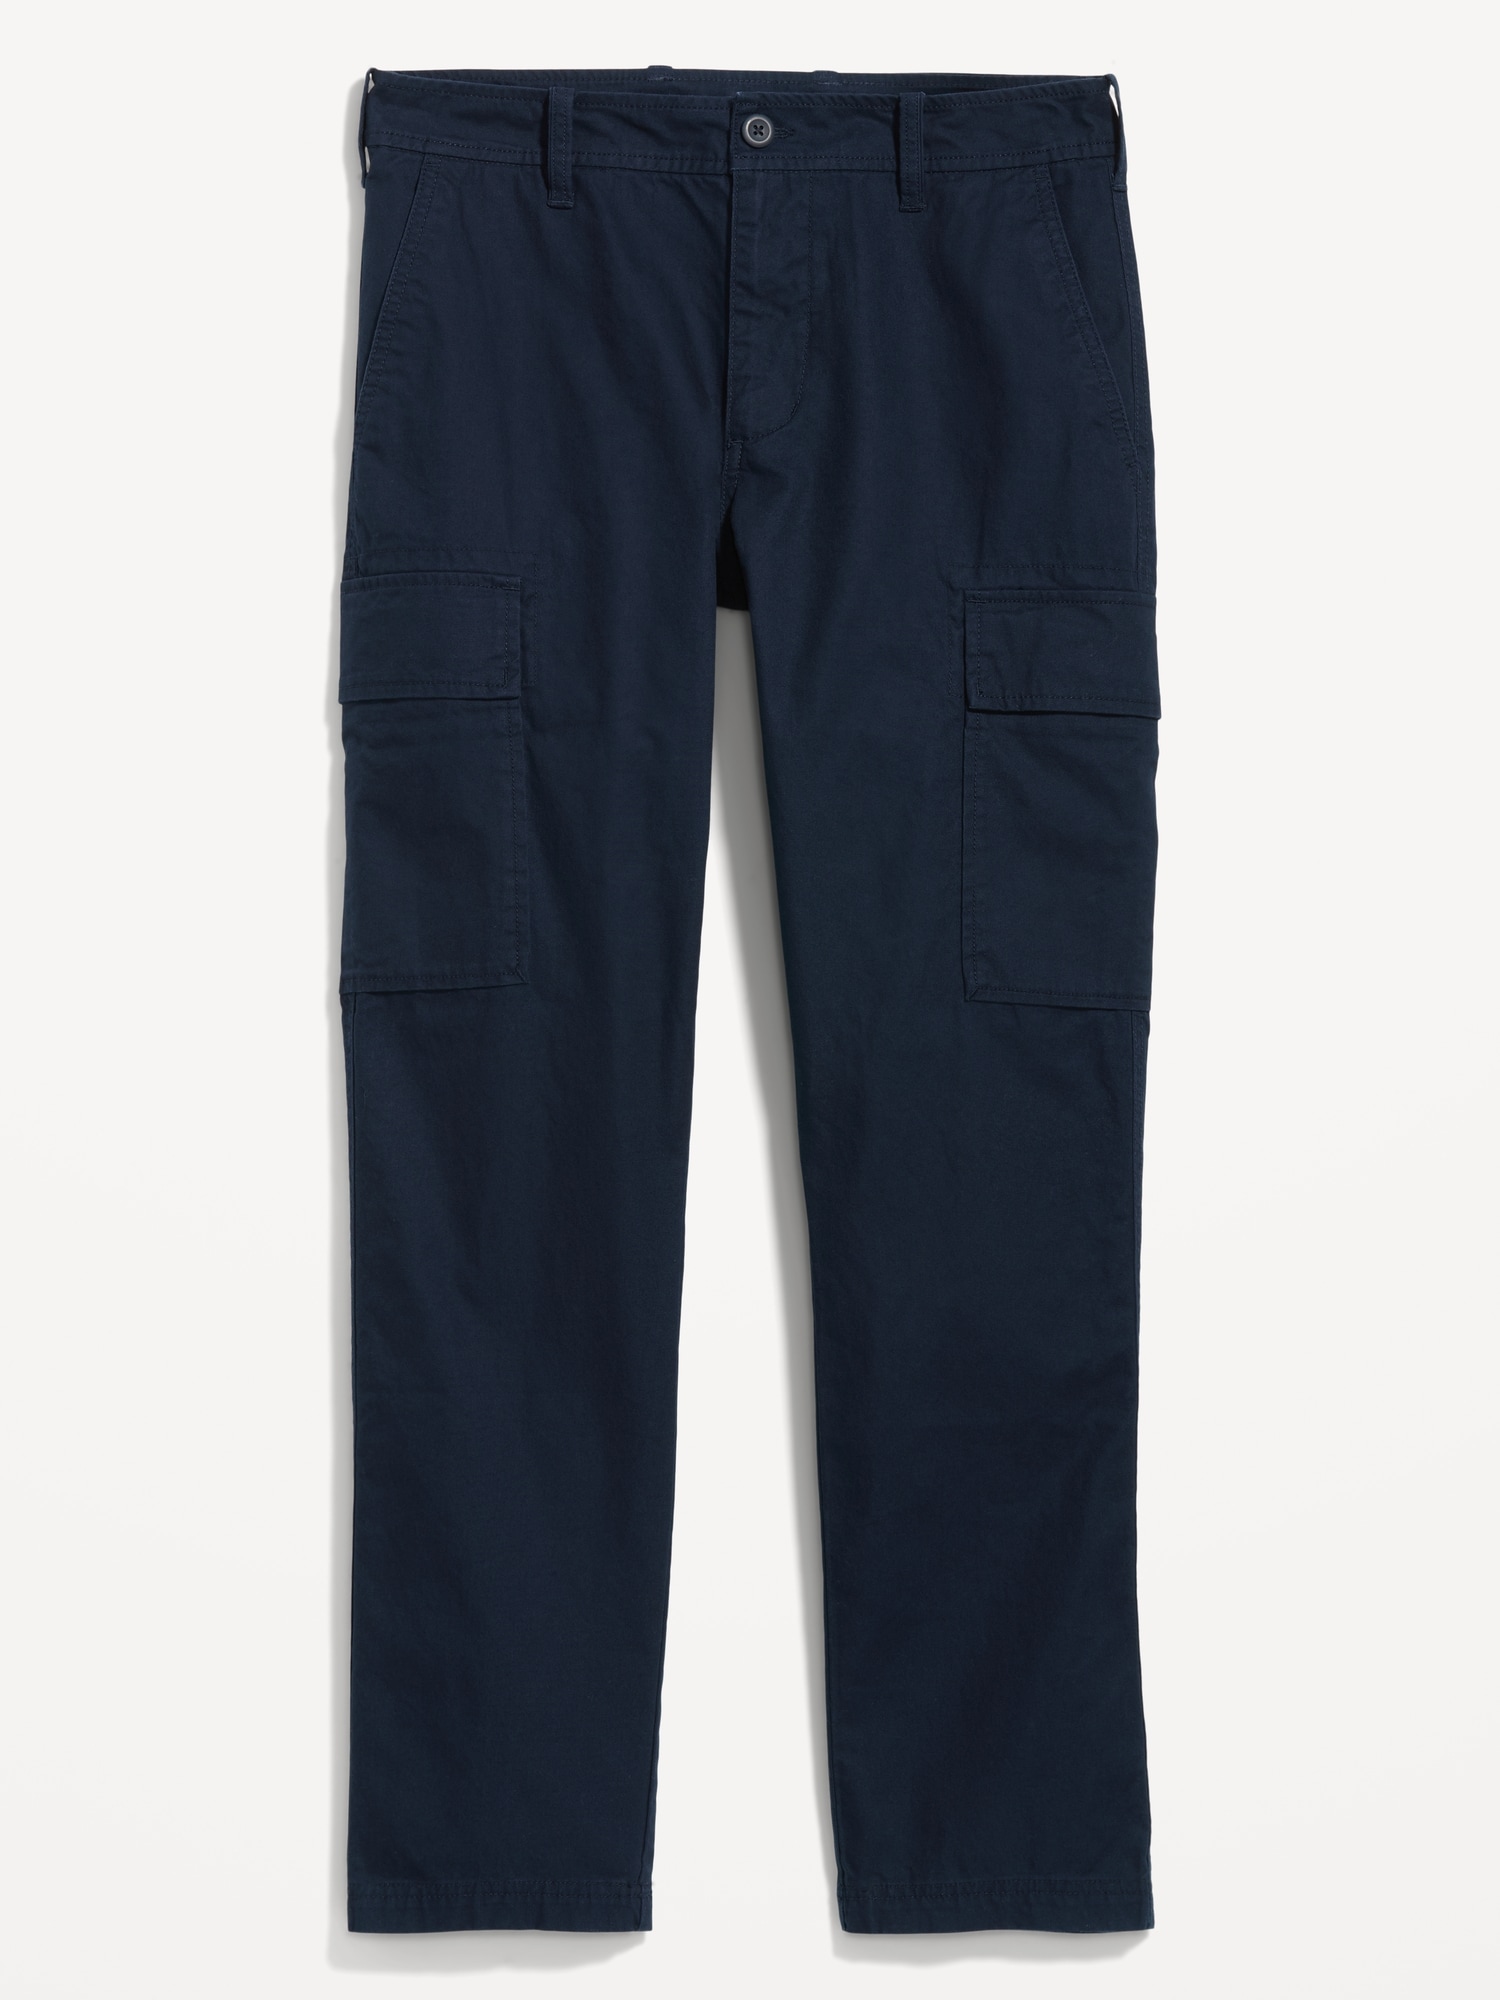 Shop Generic (Black)Men Cargo Pants Casual Large Side Pockets